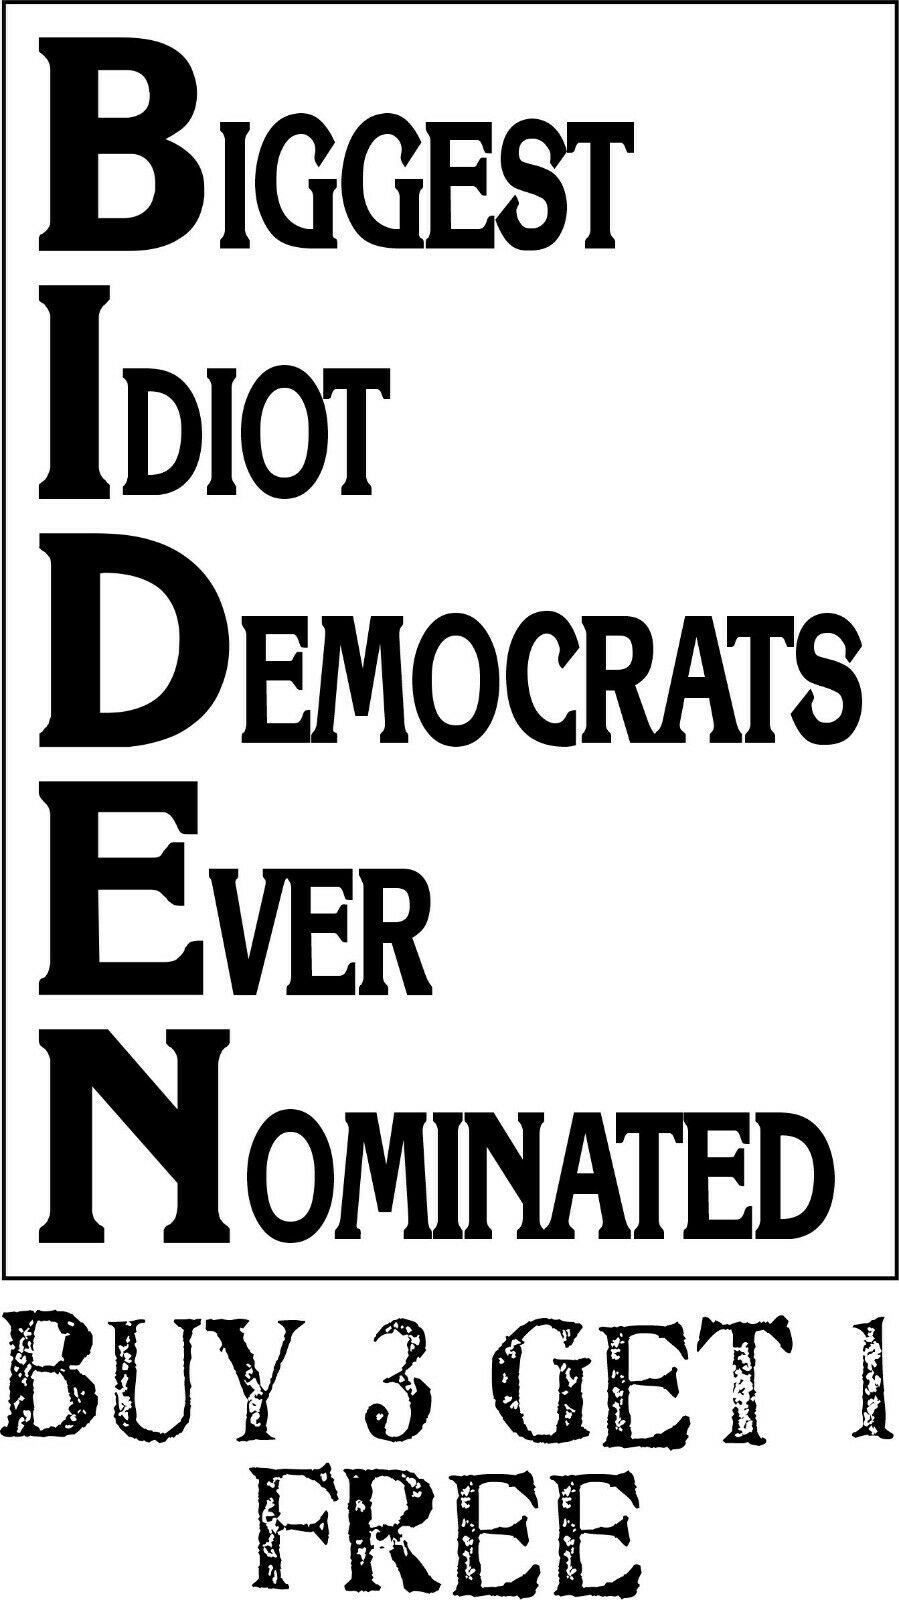 BIDEN Biggest Idiot Democrats Ever Nominated Bumper Sticker 13" x 9.1" XL Size - Powercall Sirens LLC